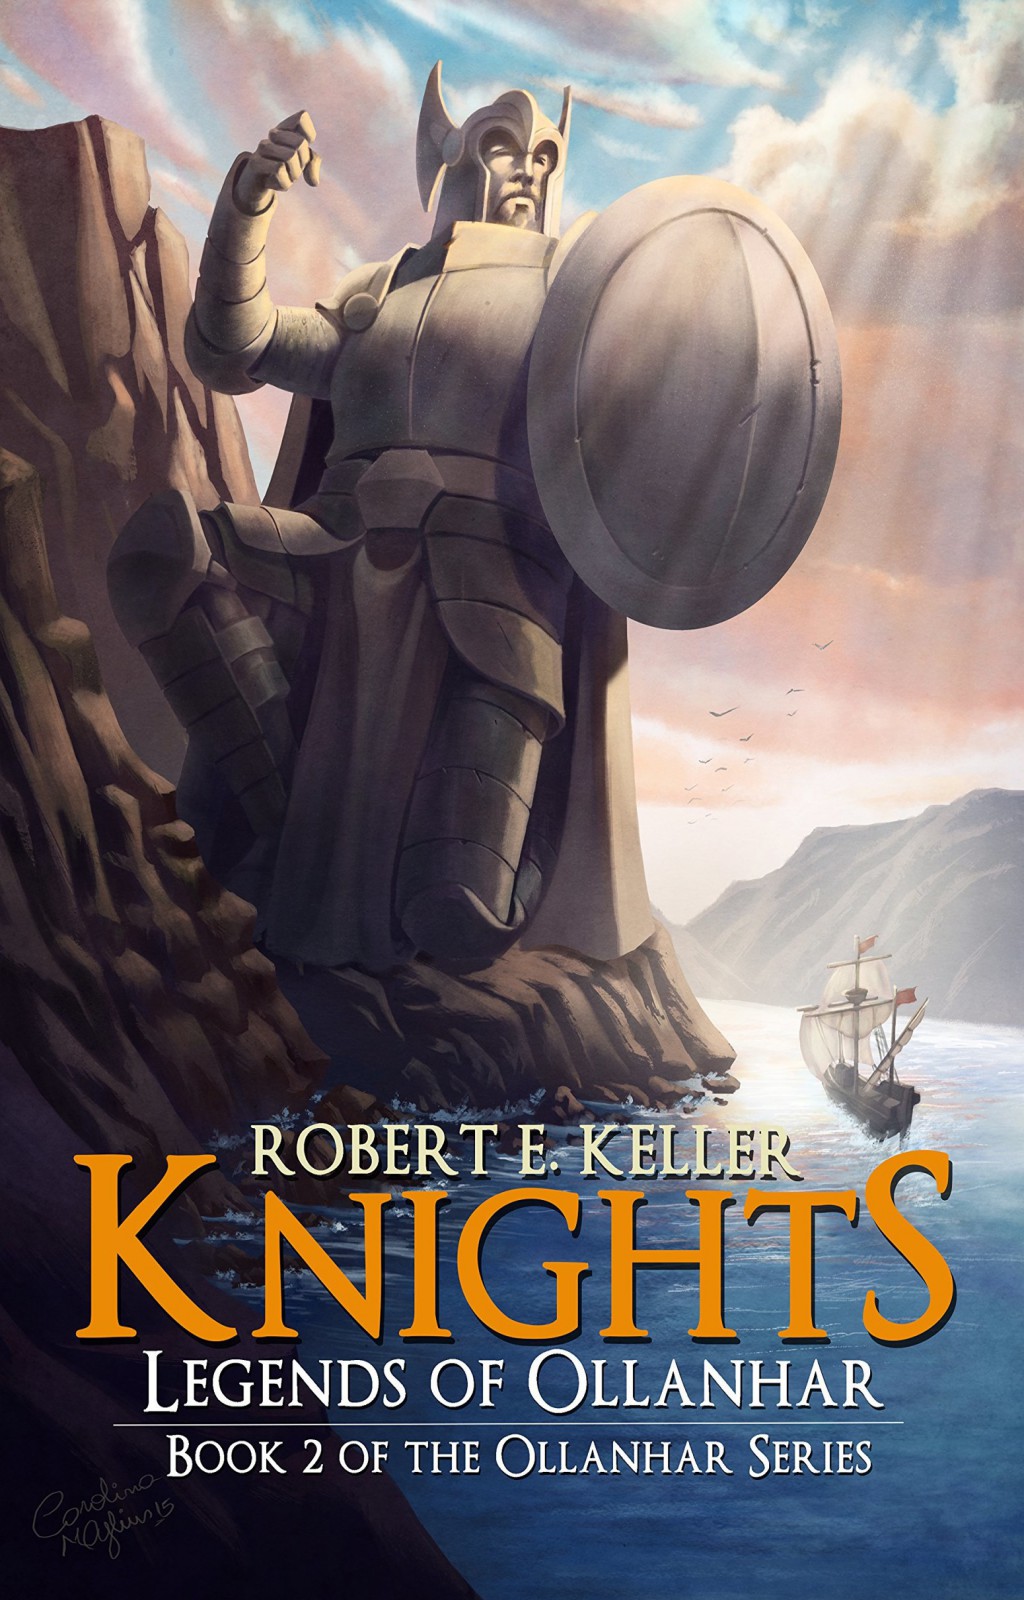 Knights: Legends of Ollanhar by Robert E. Keller